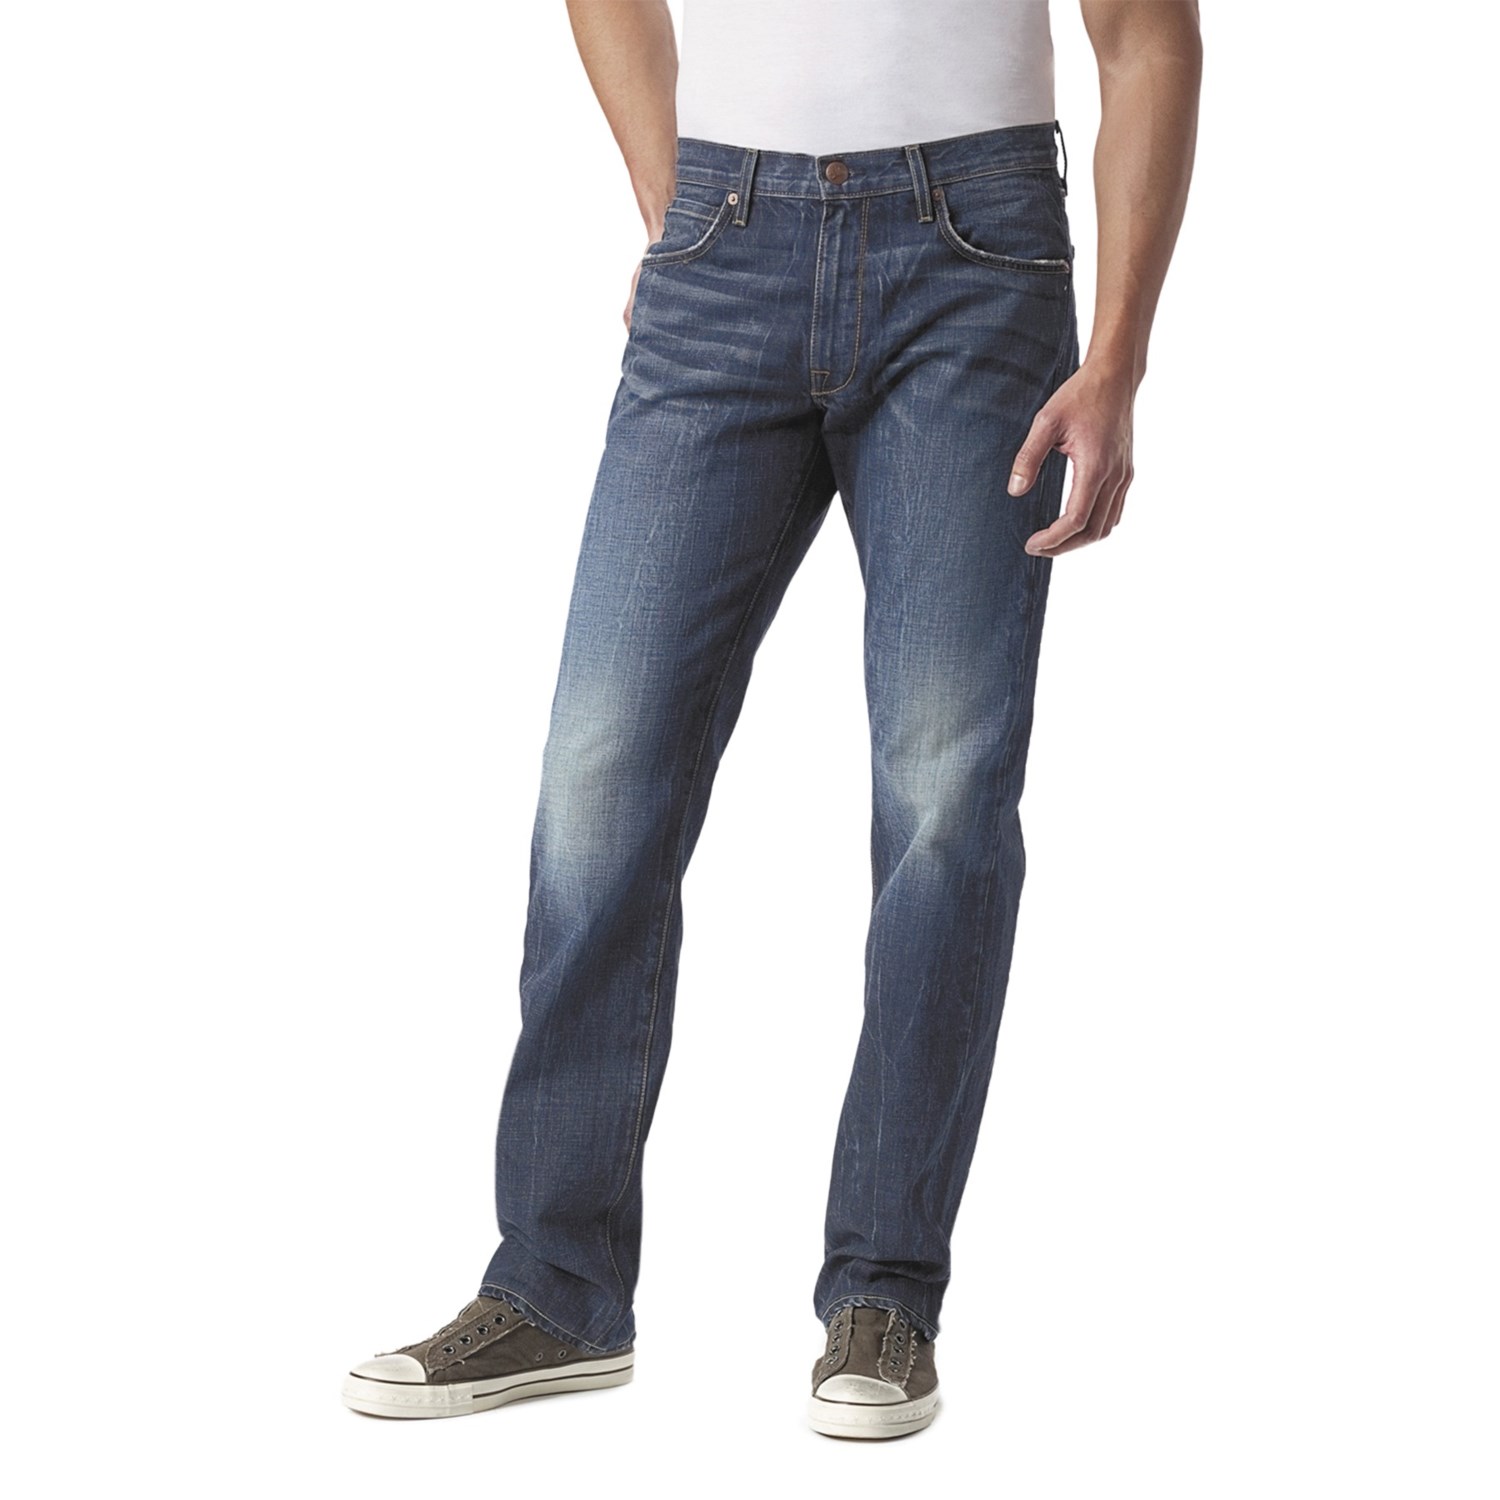 Agave Denim Waterman Humboldt Vintage Jeans - Relaxed Fit (For Men)